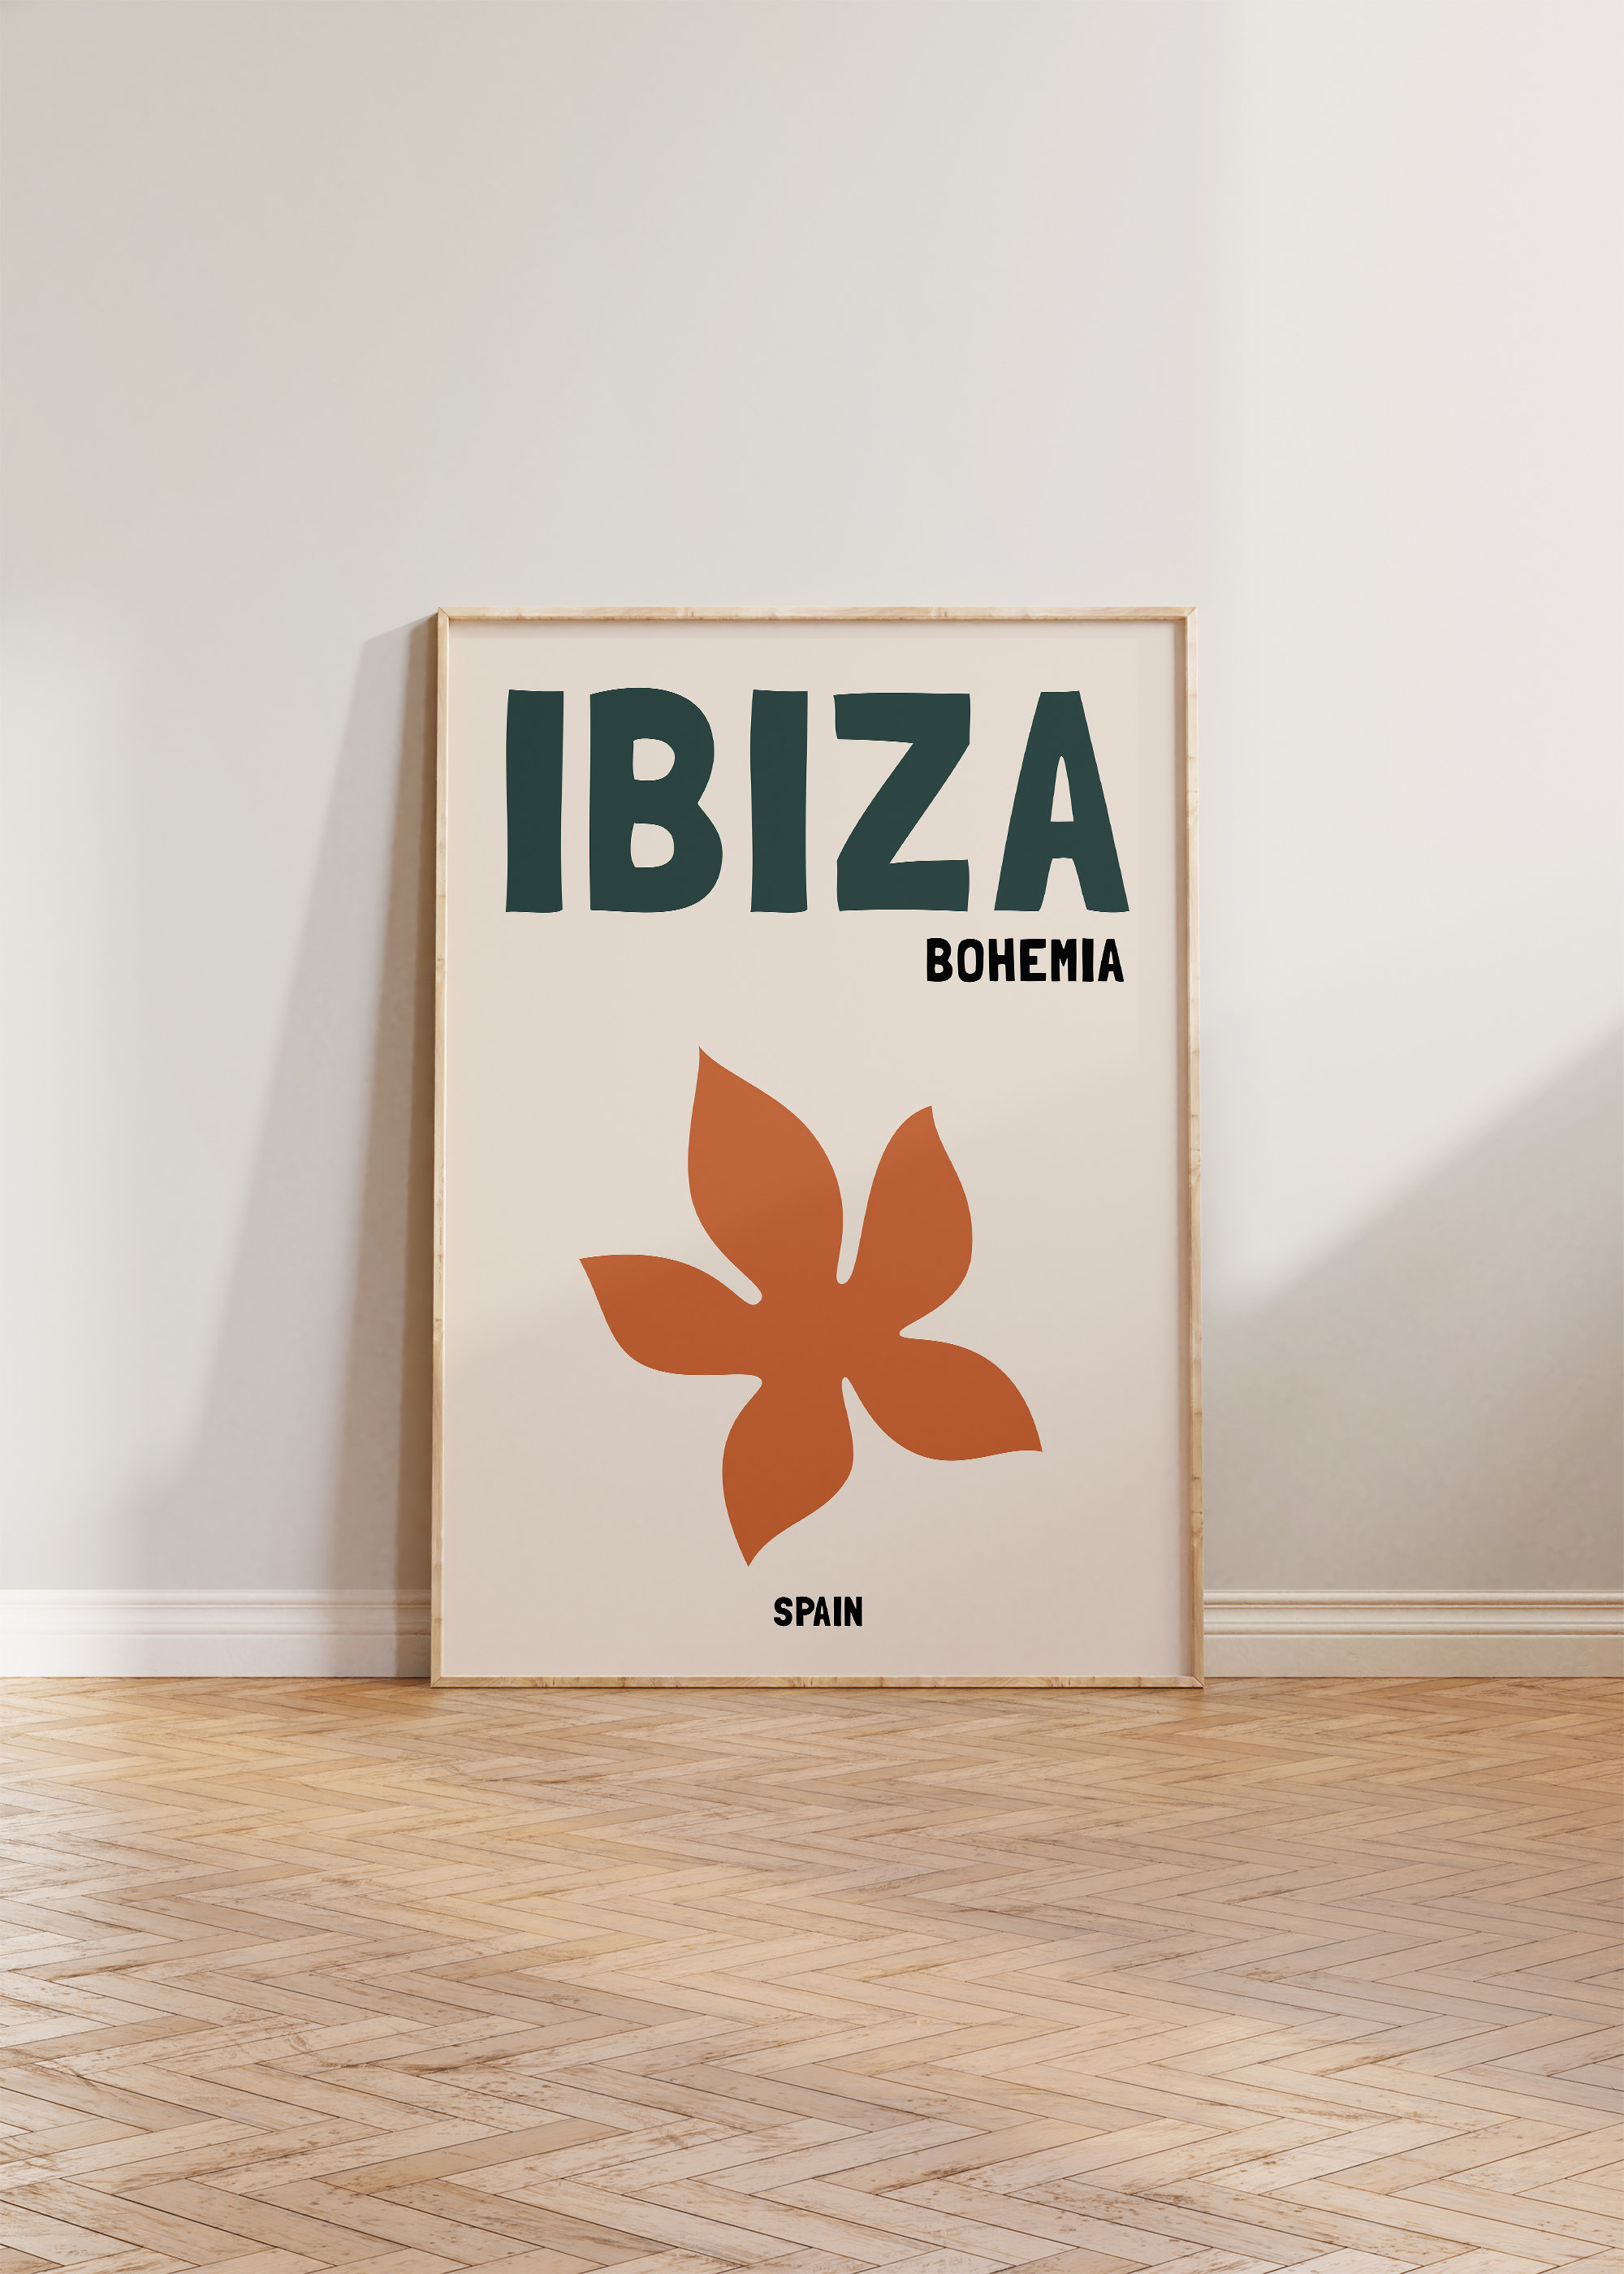 Miroir rond bois flotté - Naturel - Ibiza – La Maison d'Ibiza